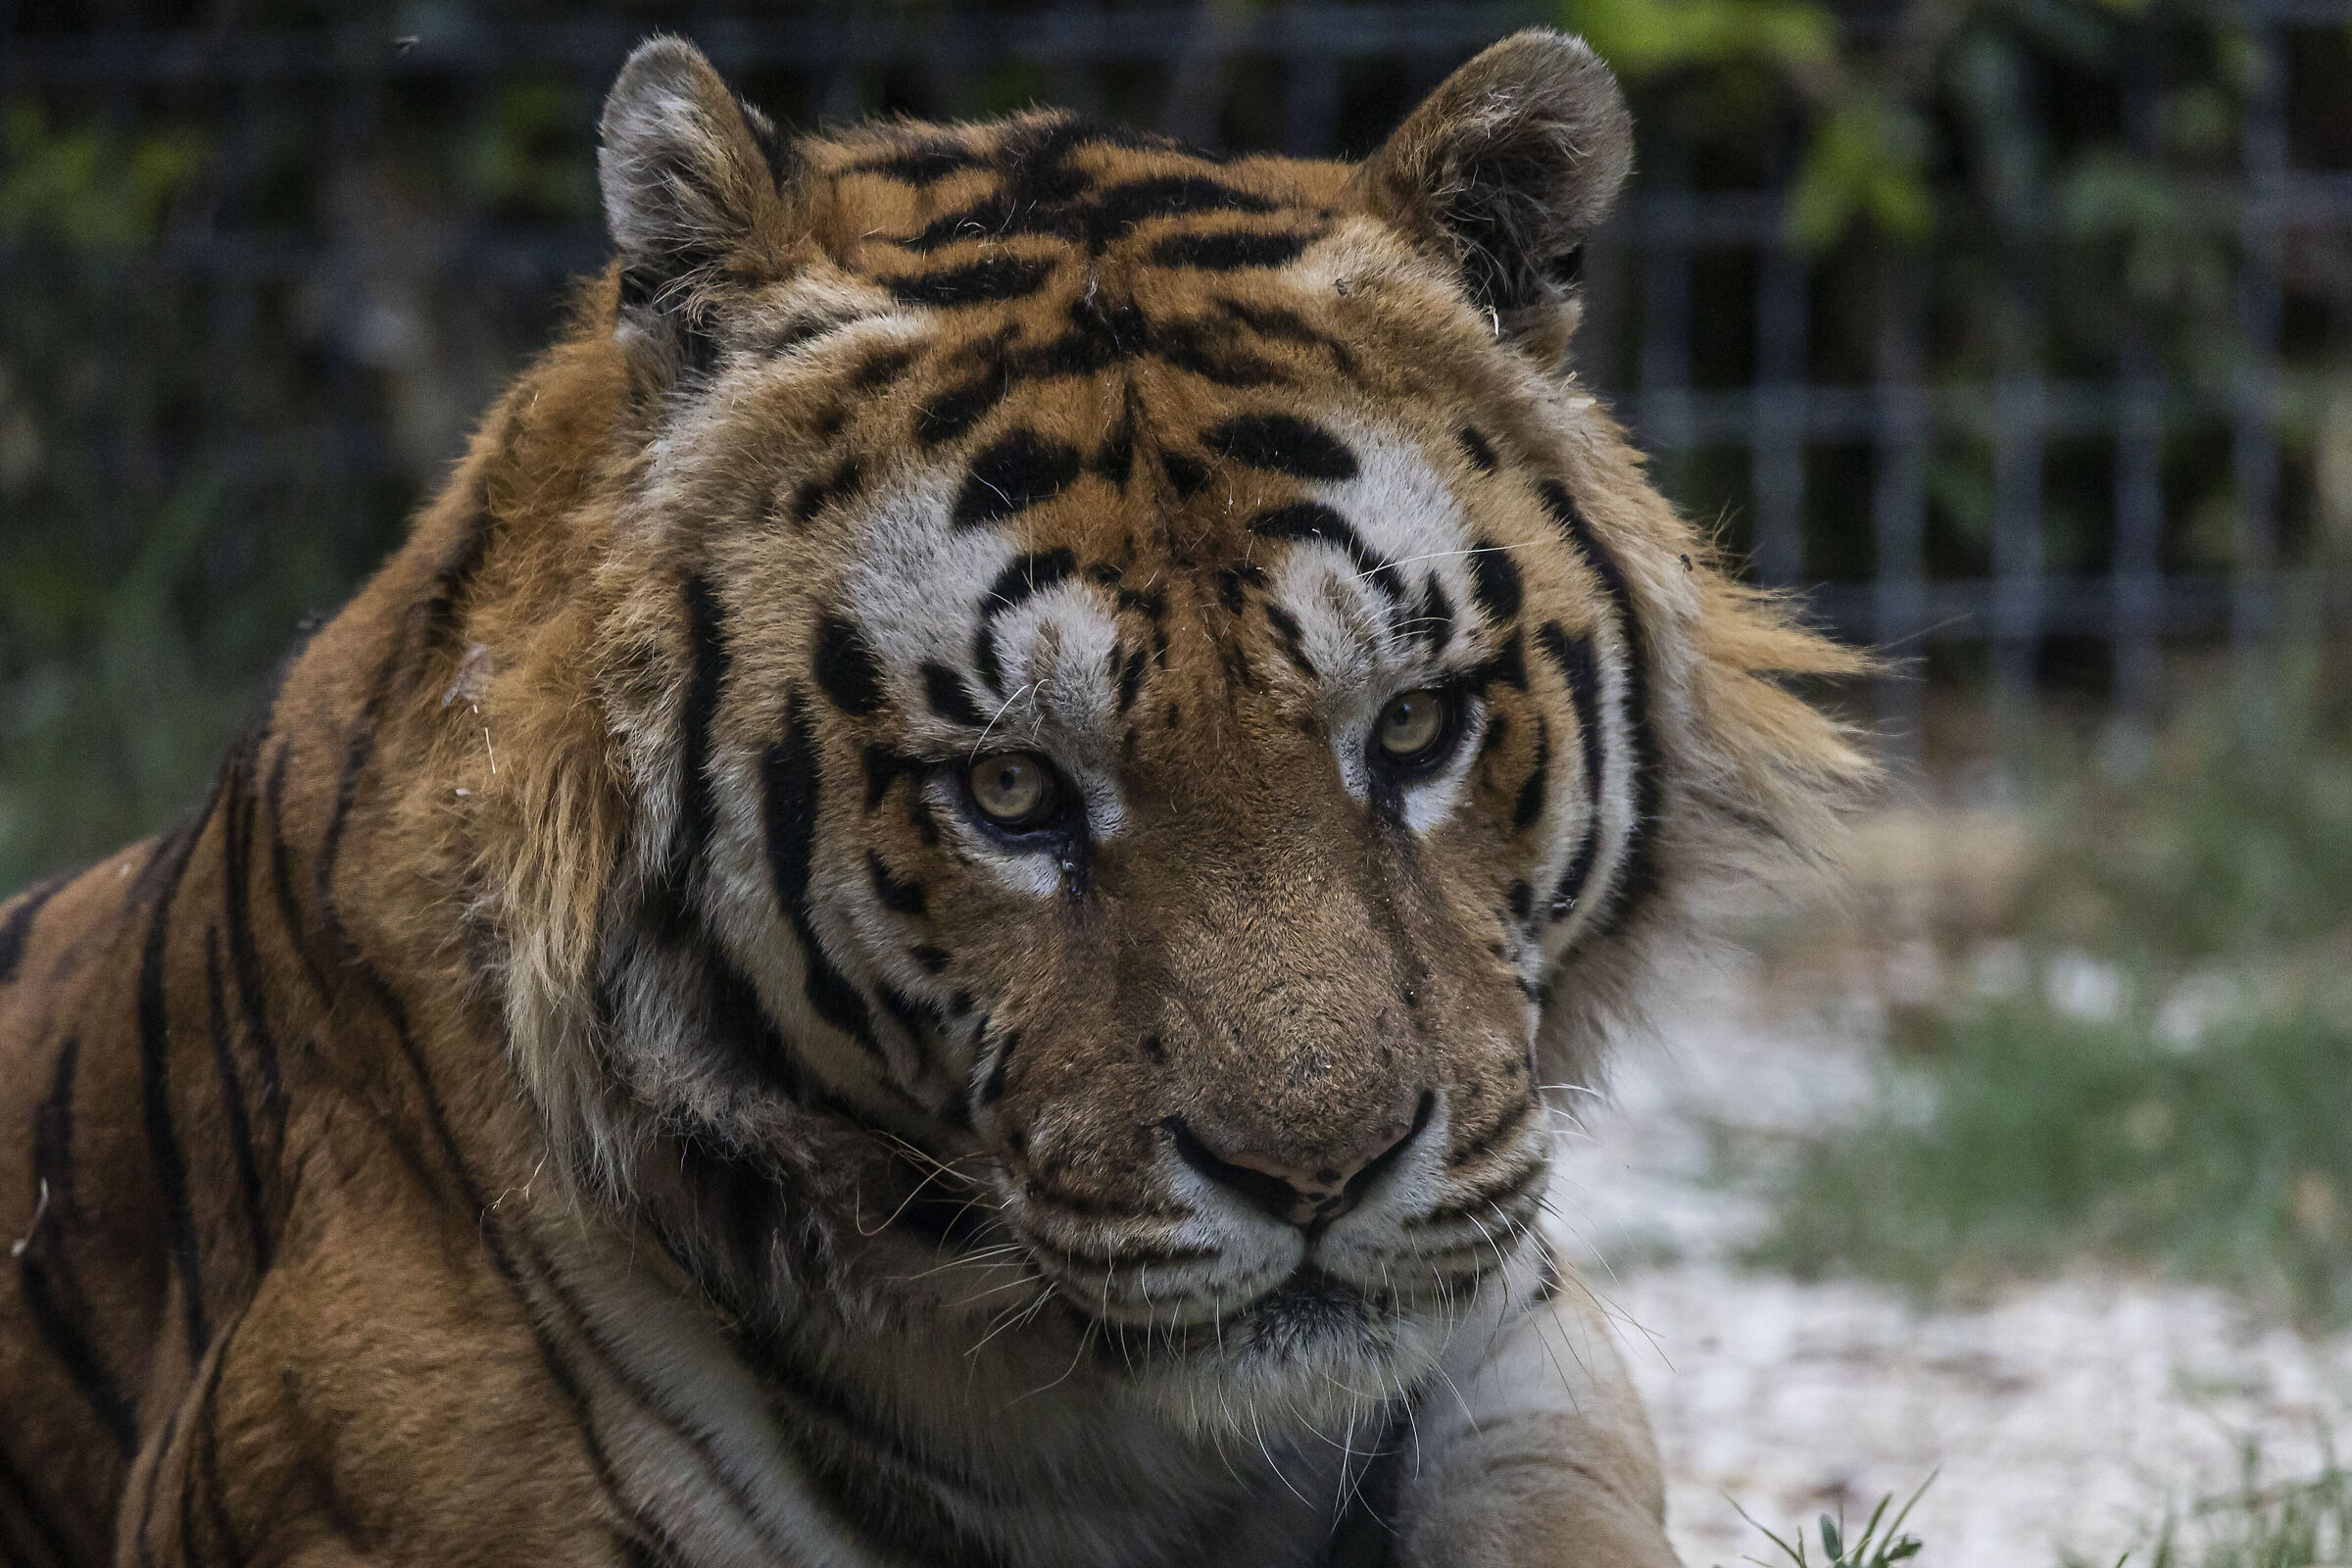 Tiger gaze...